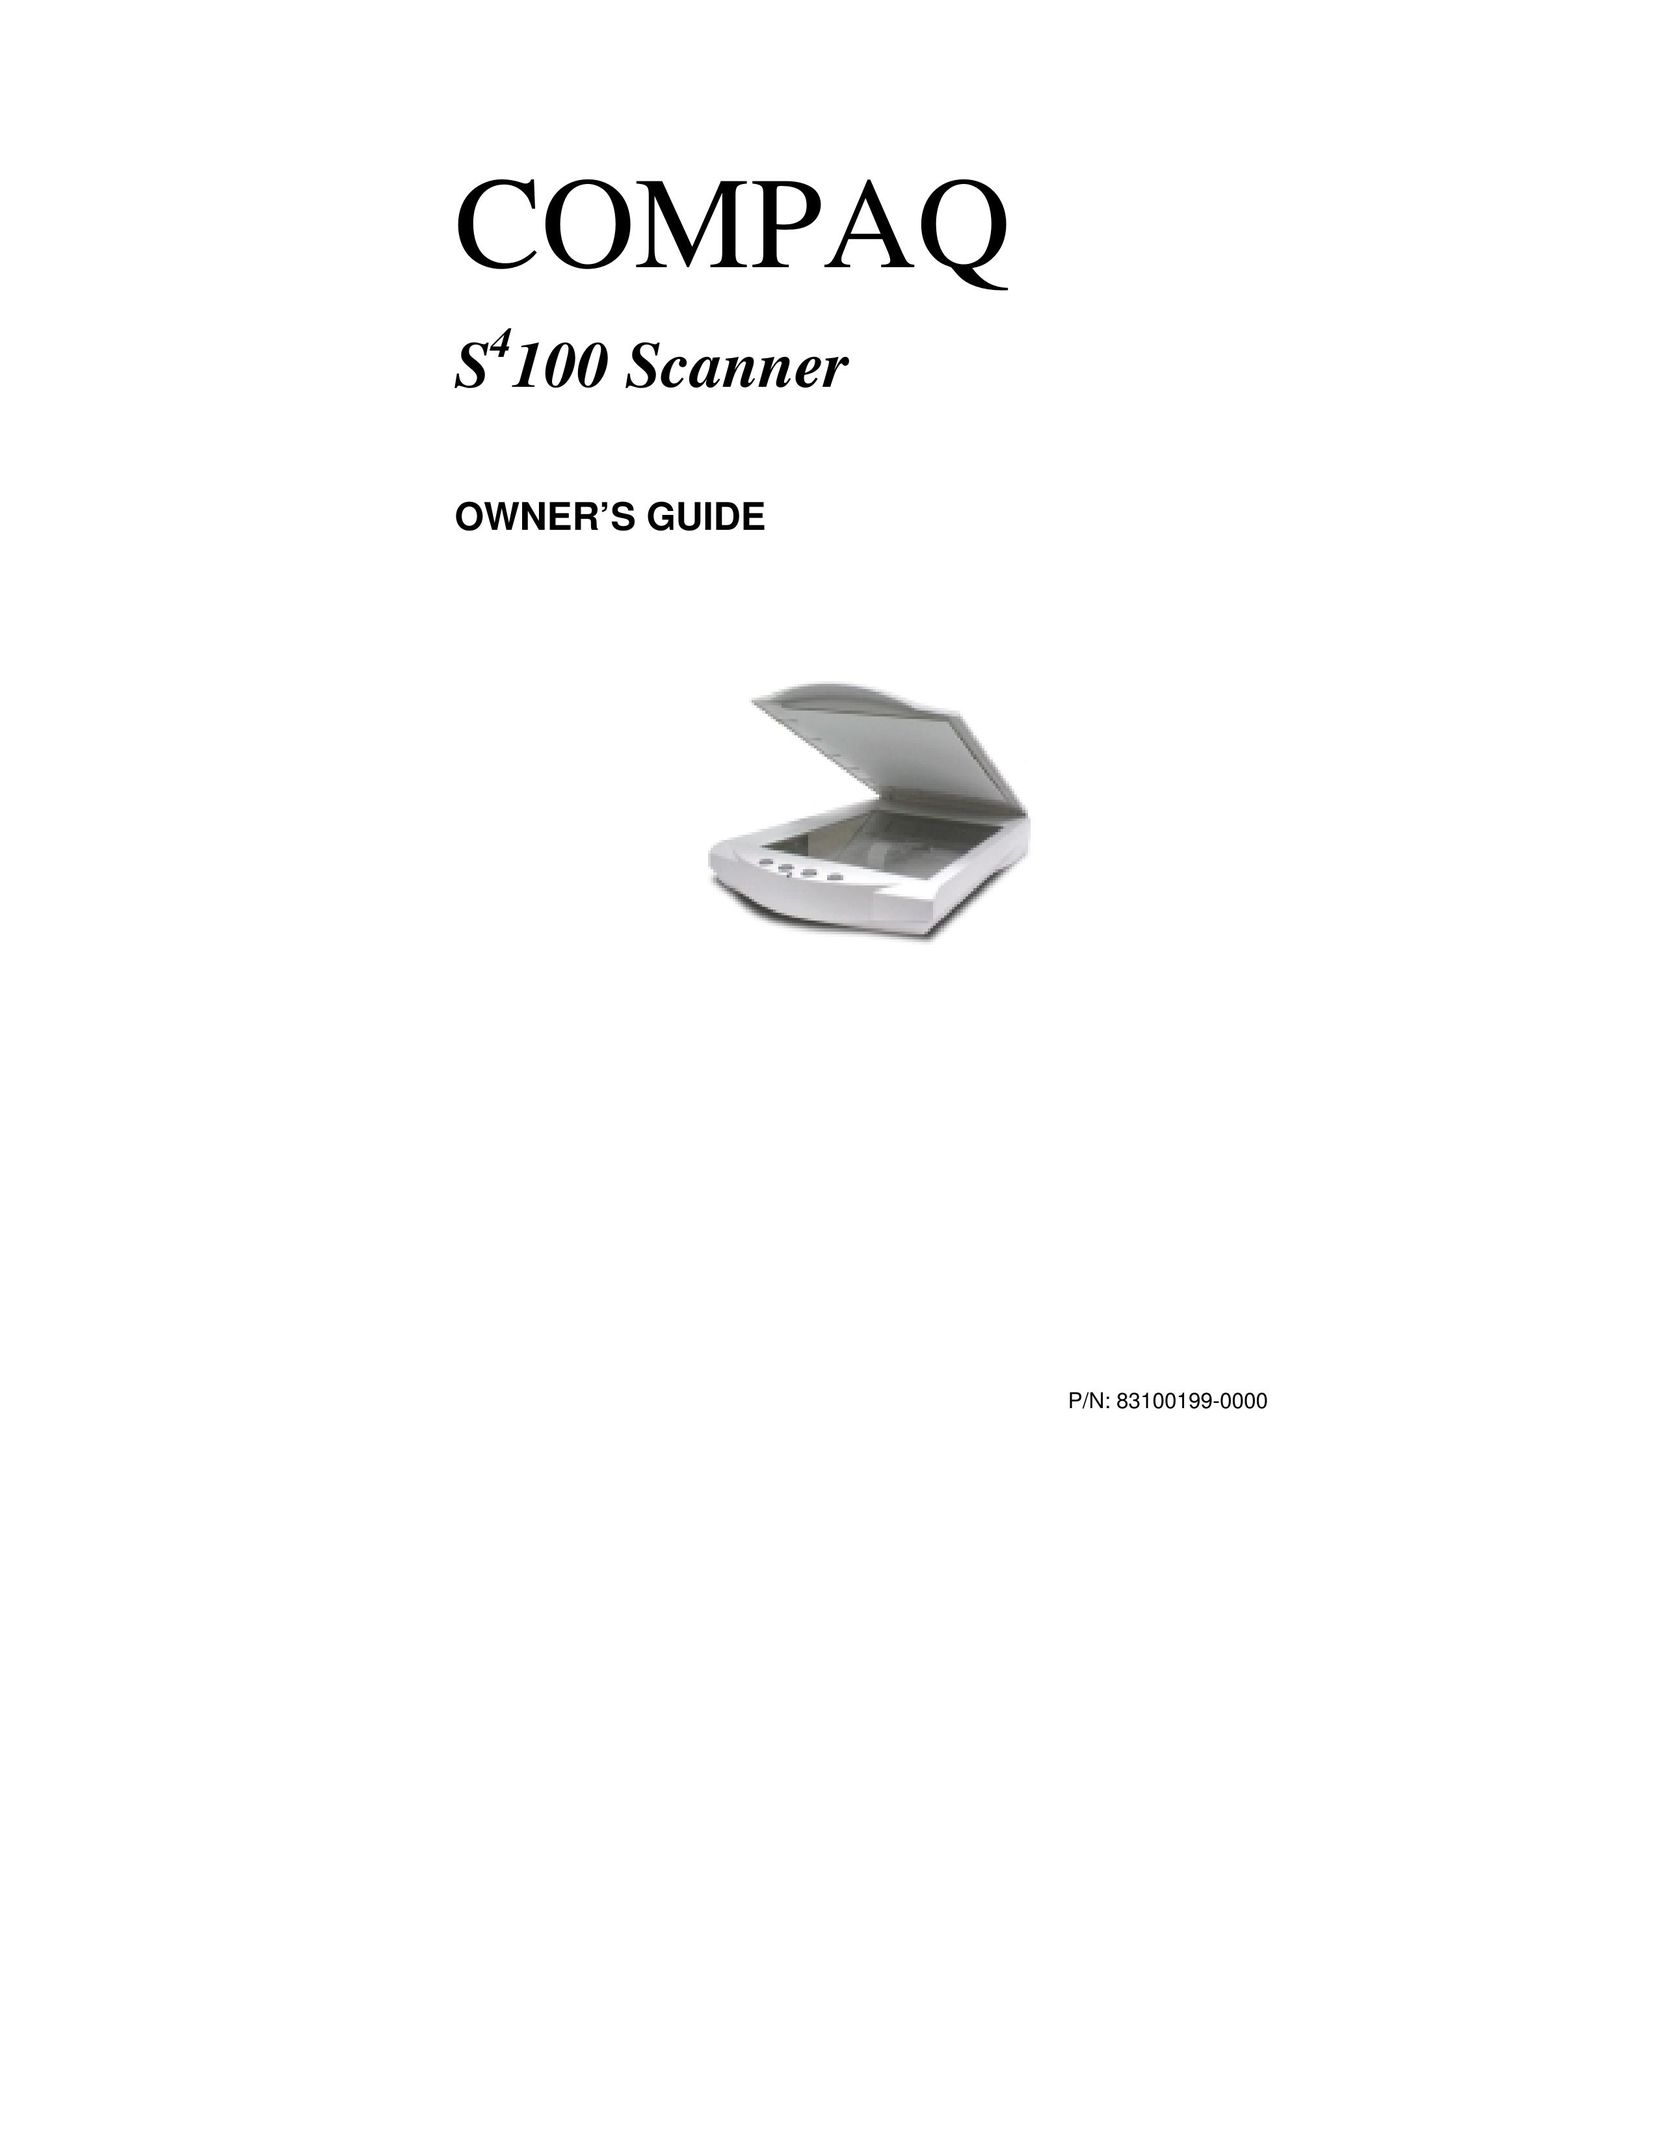 Compaq S4 100 Scanner User Manual